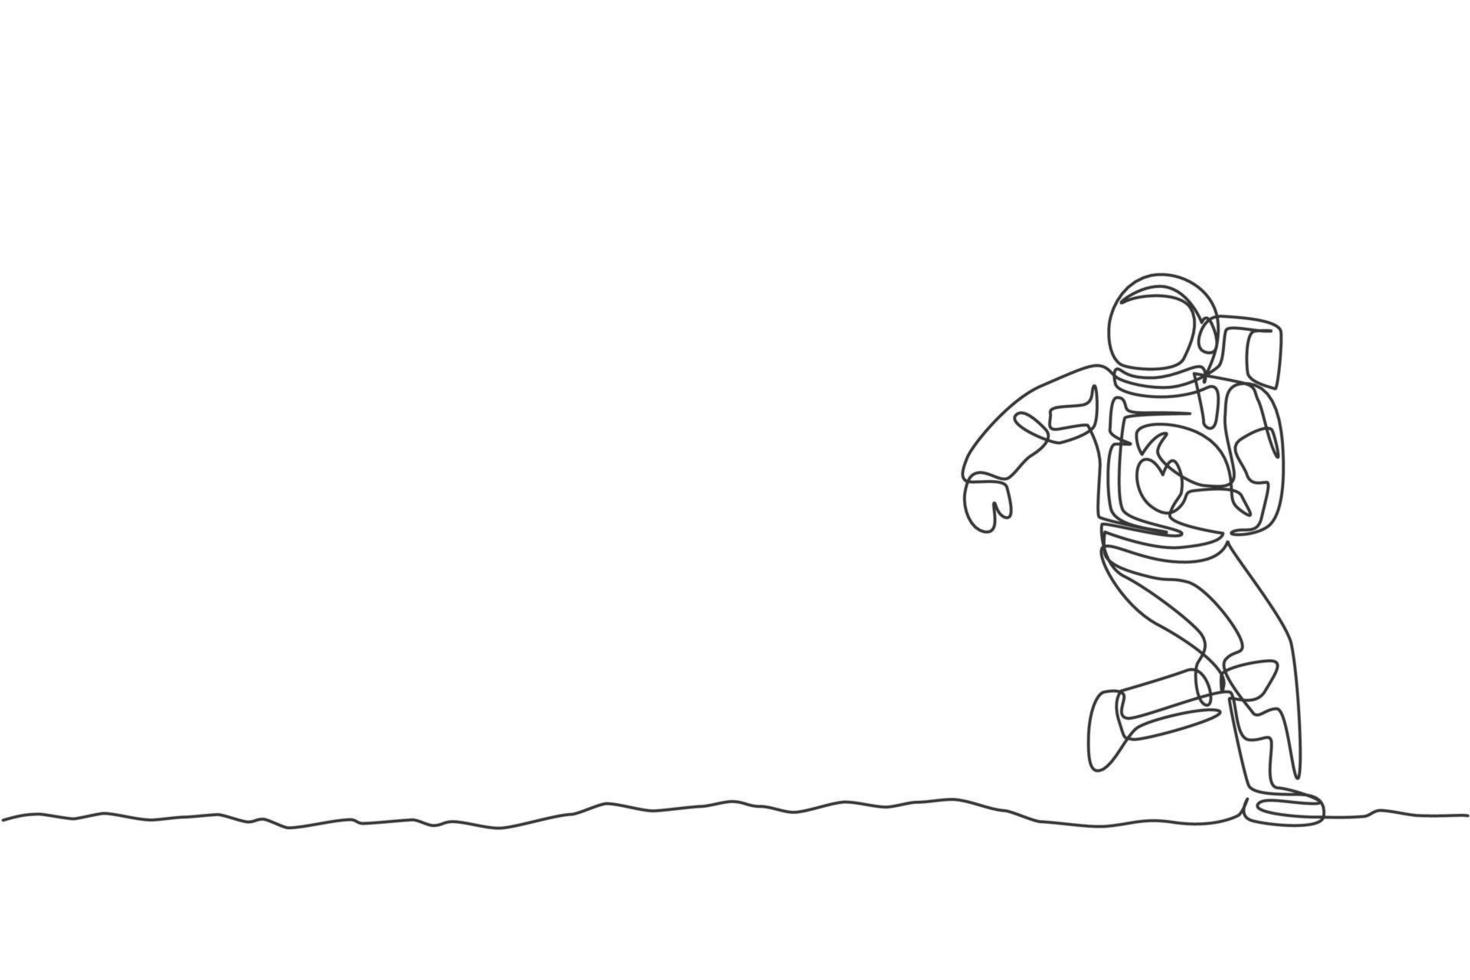 en enda radritning rymdman astronaut övar amerikansk fotboll i kosmisk galax vektor illustration. friska yttre rymden kosmonaut livsstil sport koncept. modern kontinuerlig linje rita design